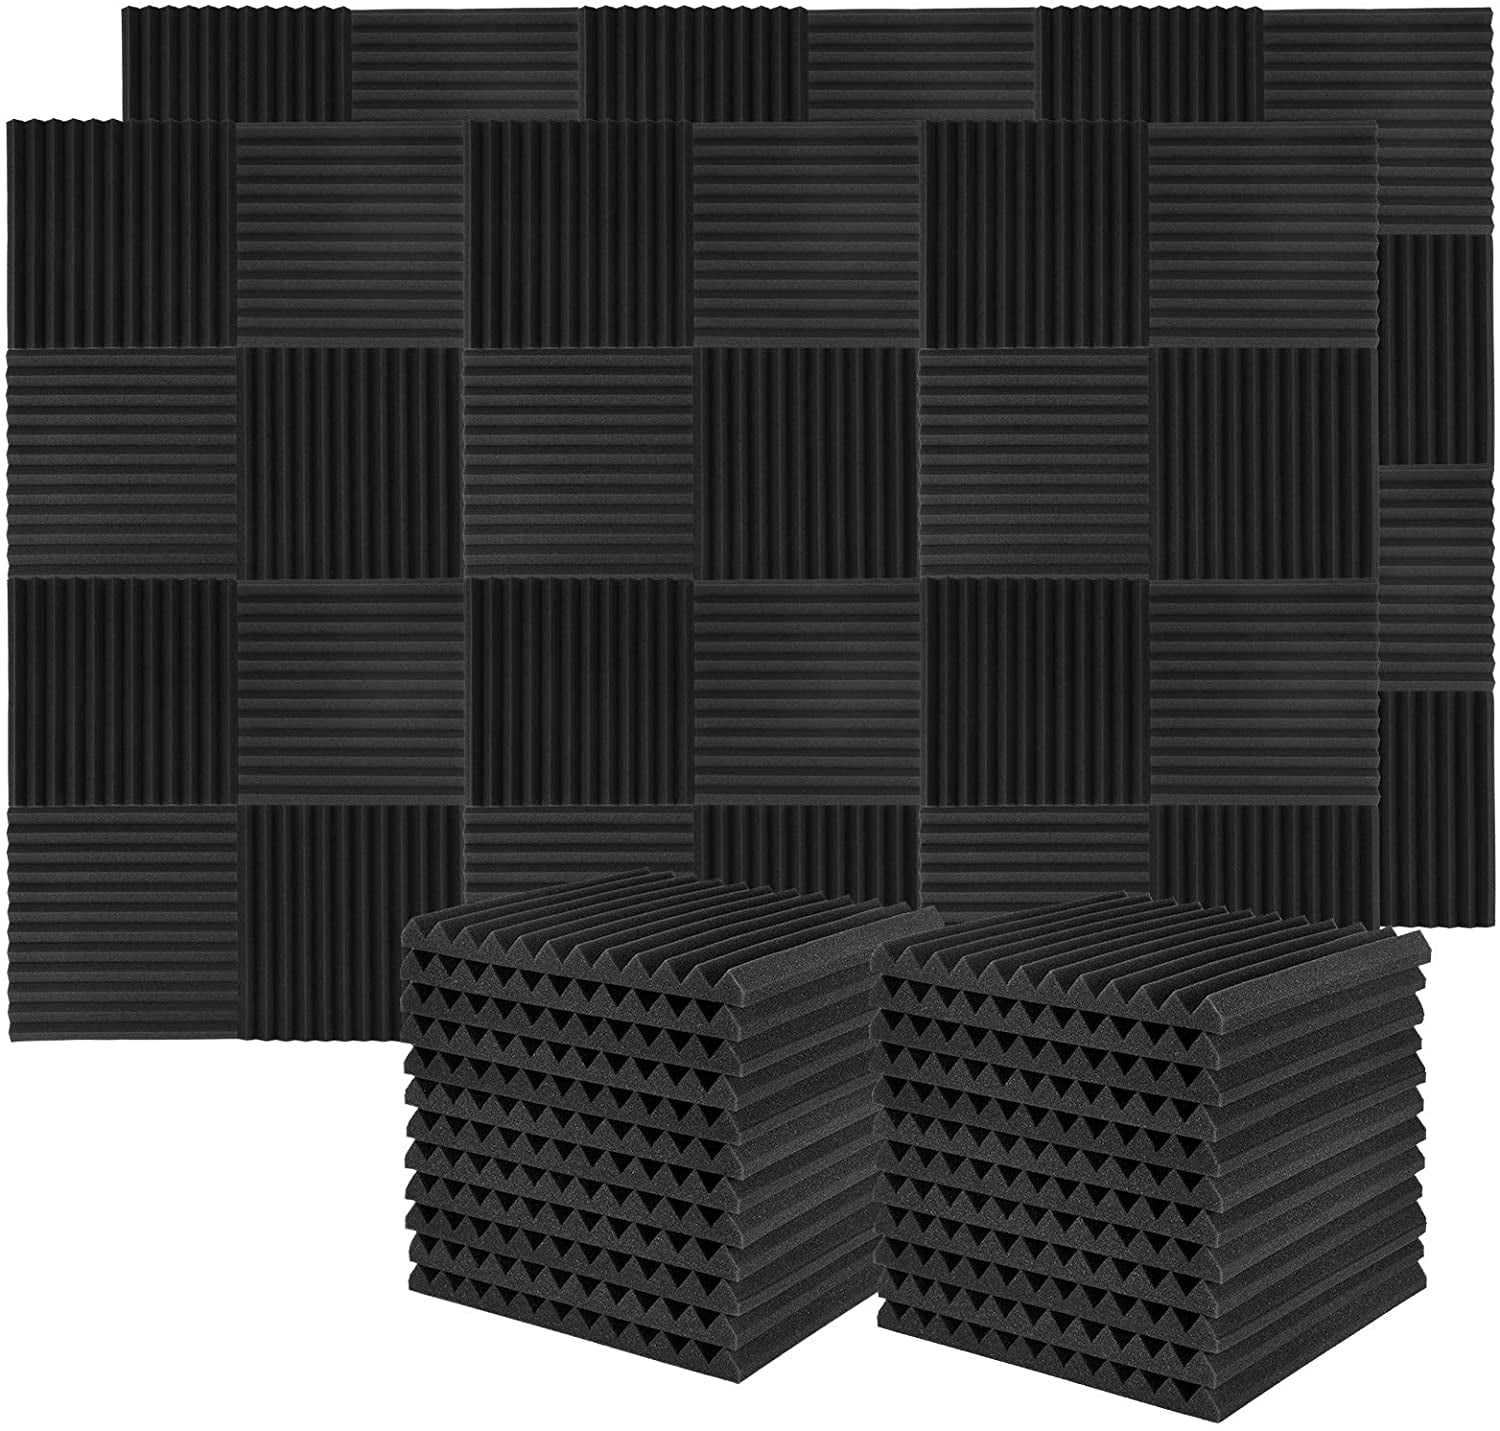 12" x 12" tiles Home Studio Acoustic Foam Egg box 